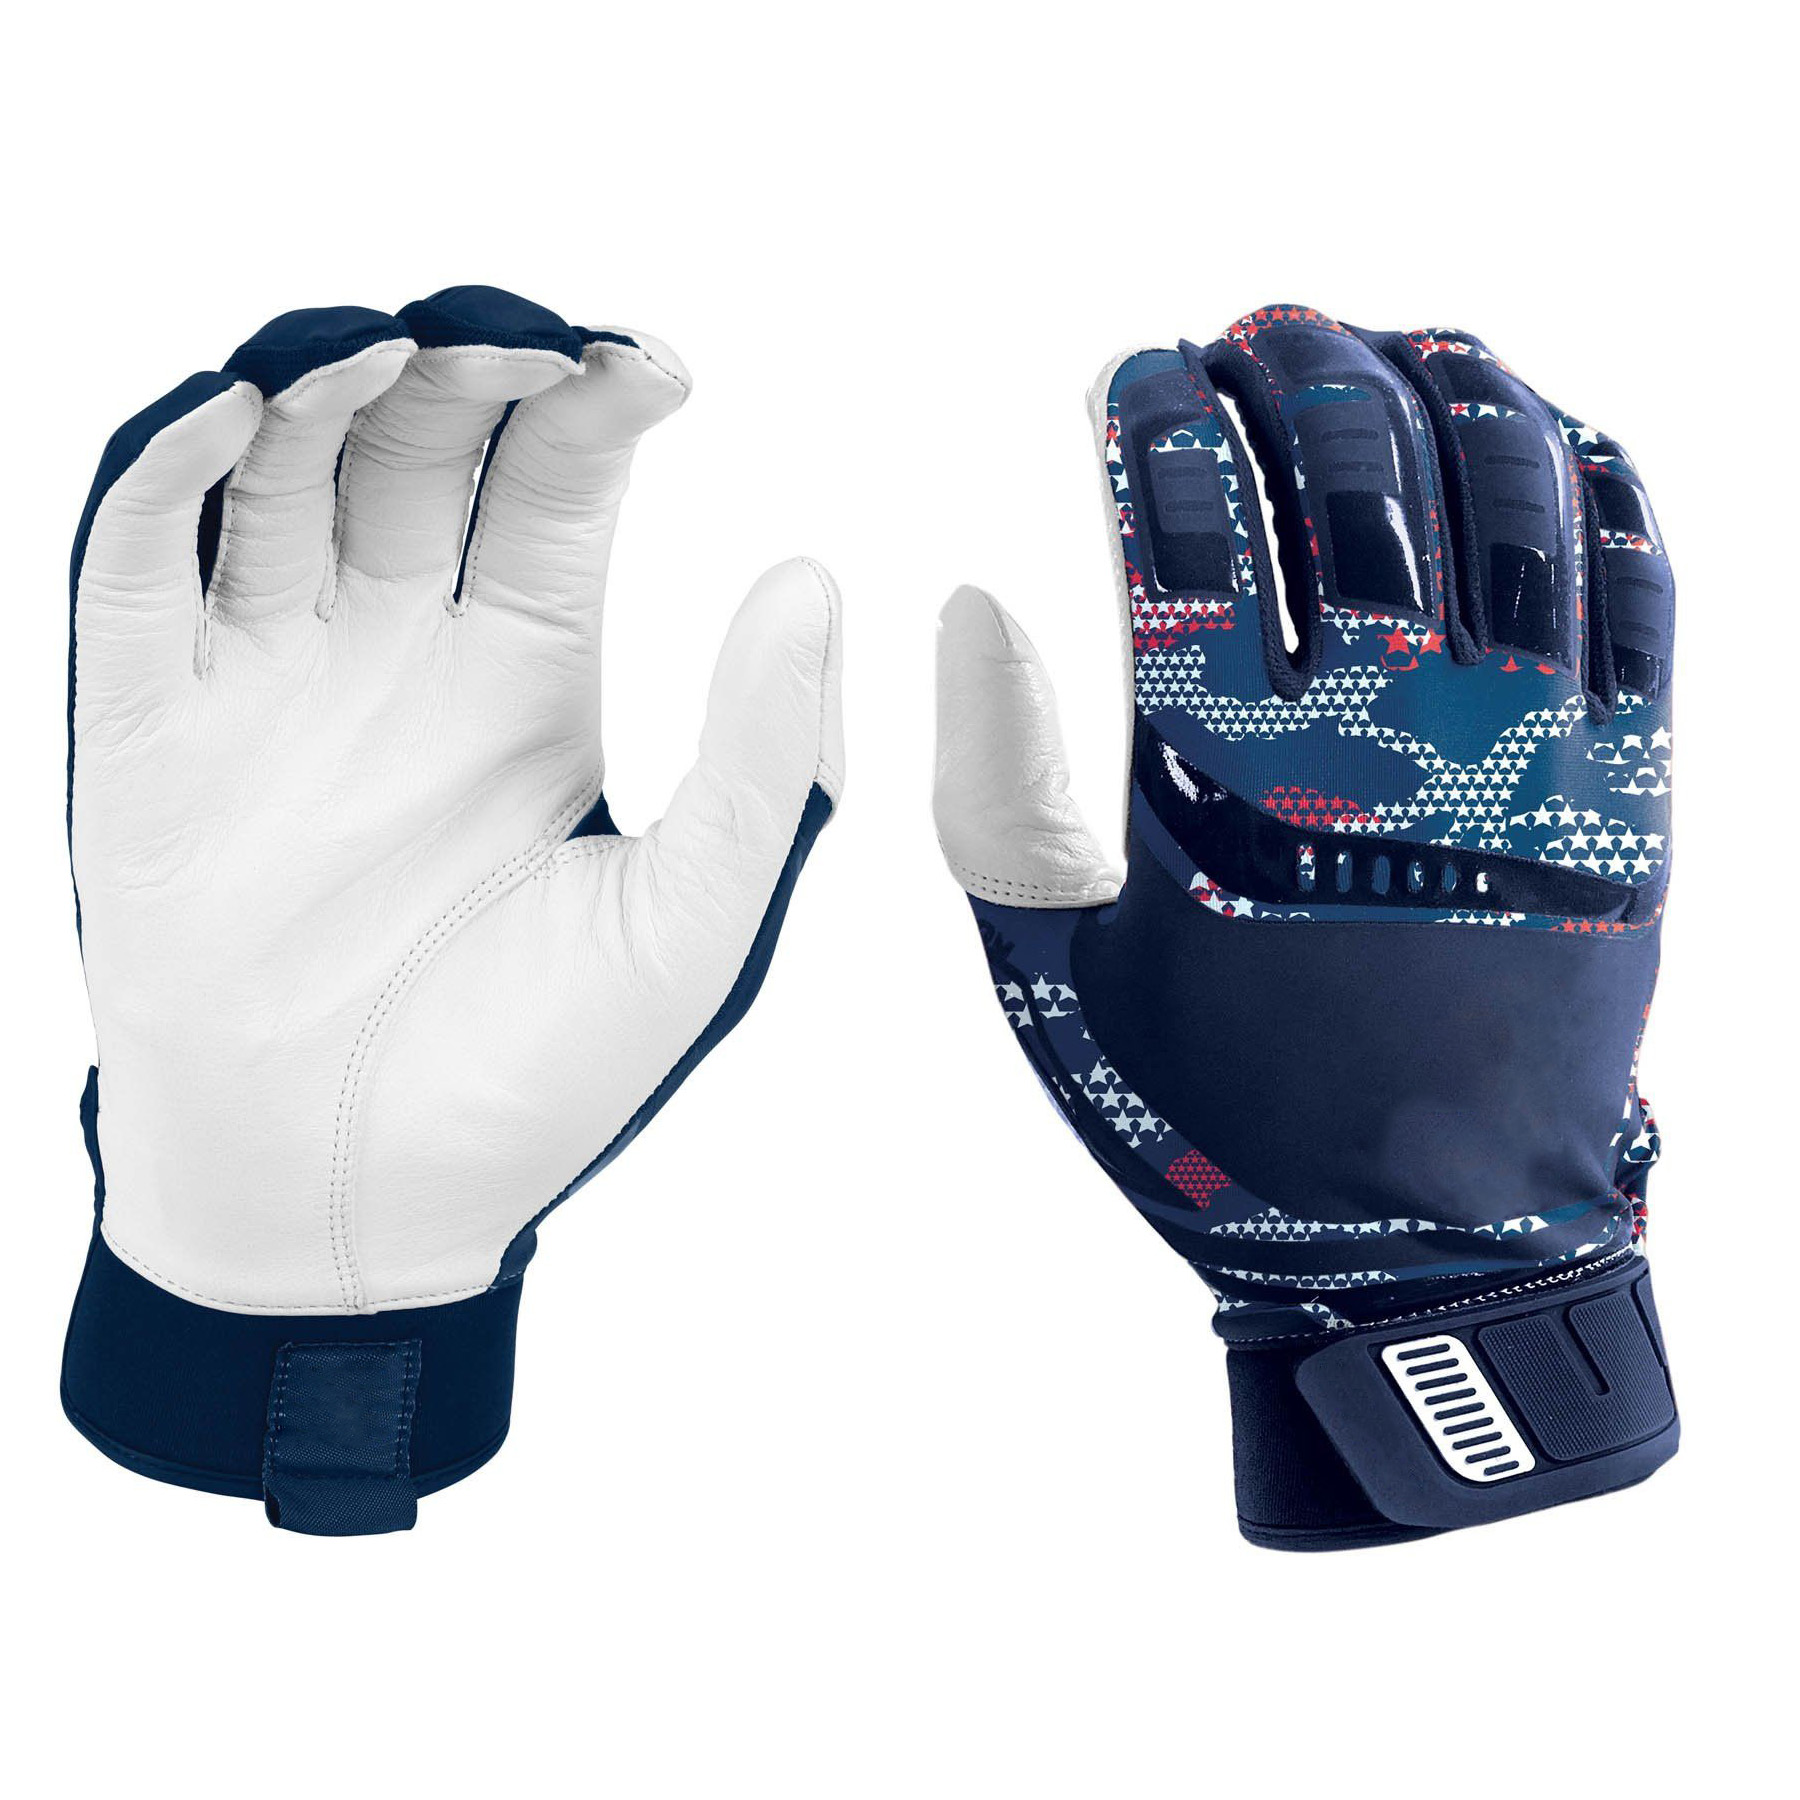 custom top quality cabretta leather durable soft elastic breathable adult men batting gloves